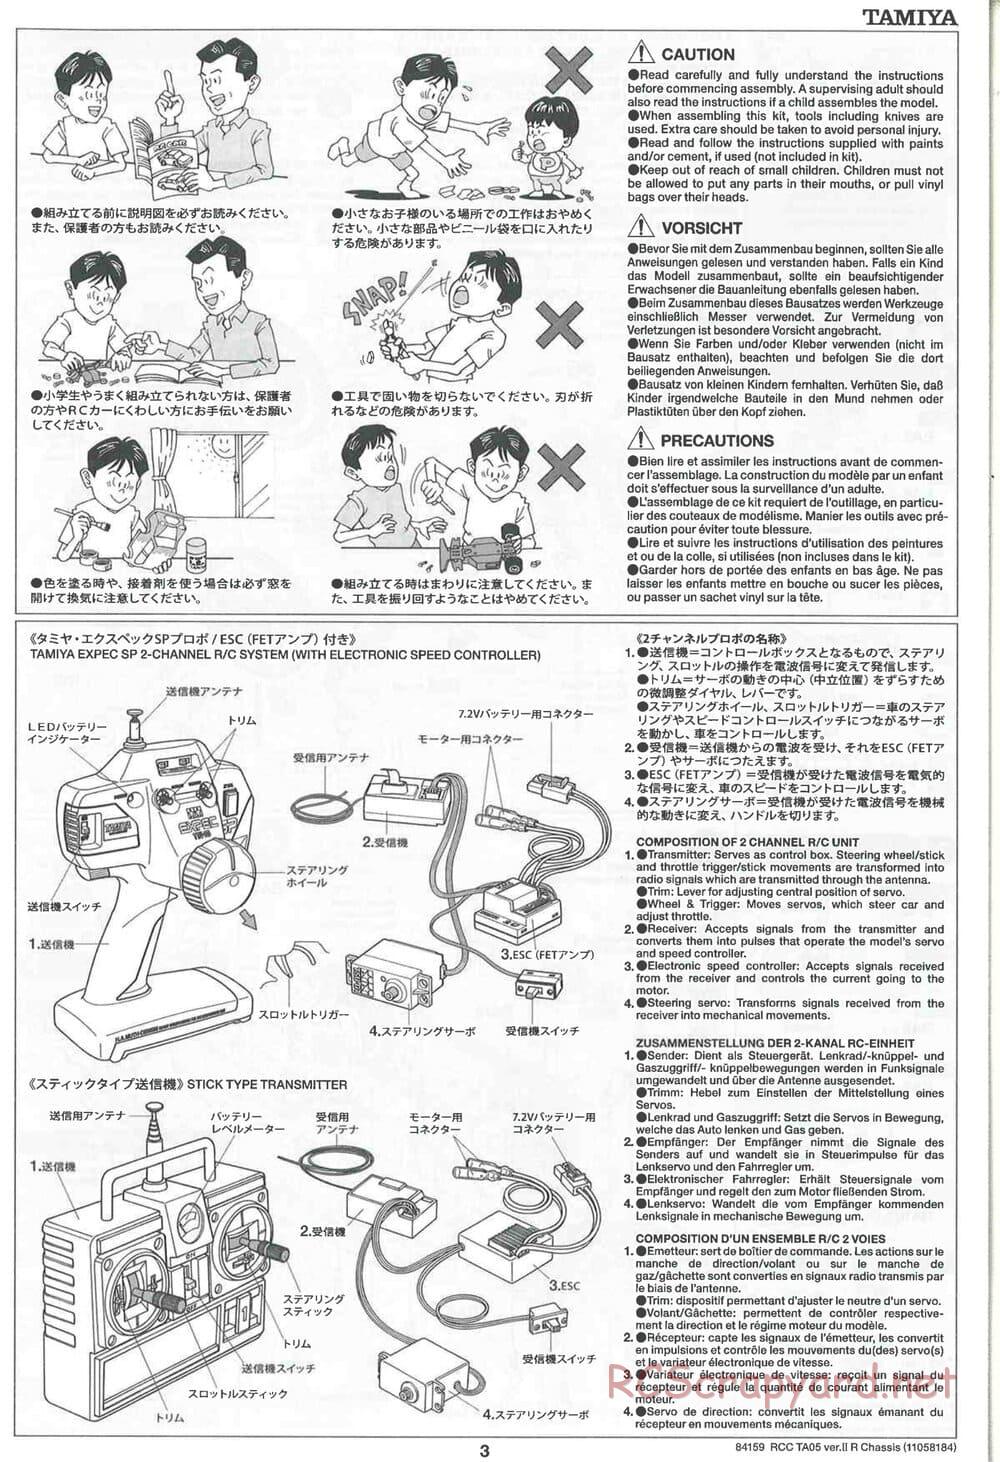 Tamiya - TA05 Ver.II R Chassis - Manual - Page 3